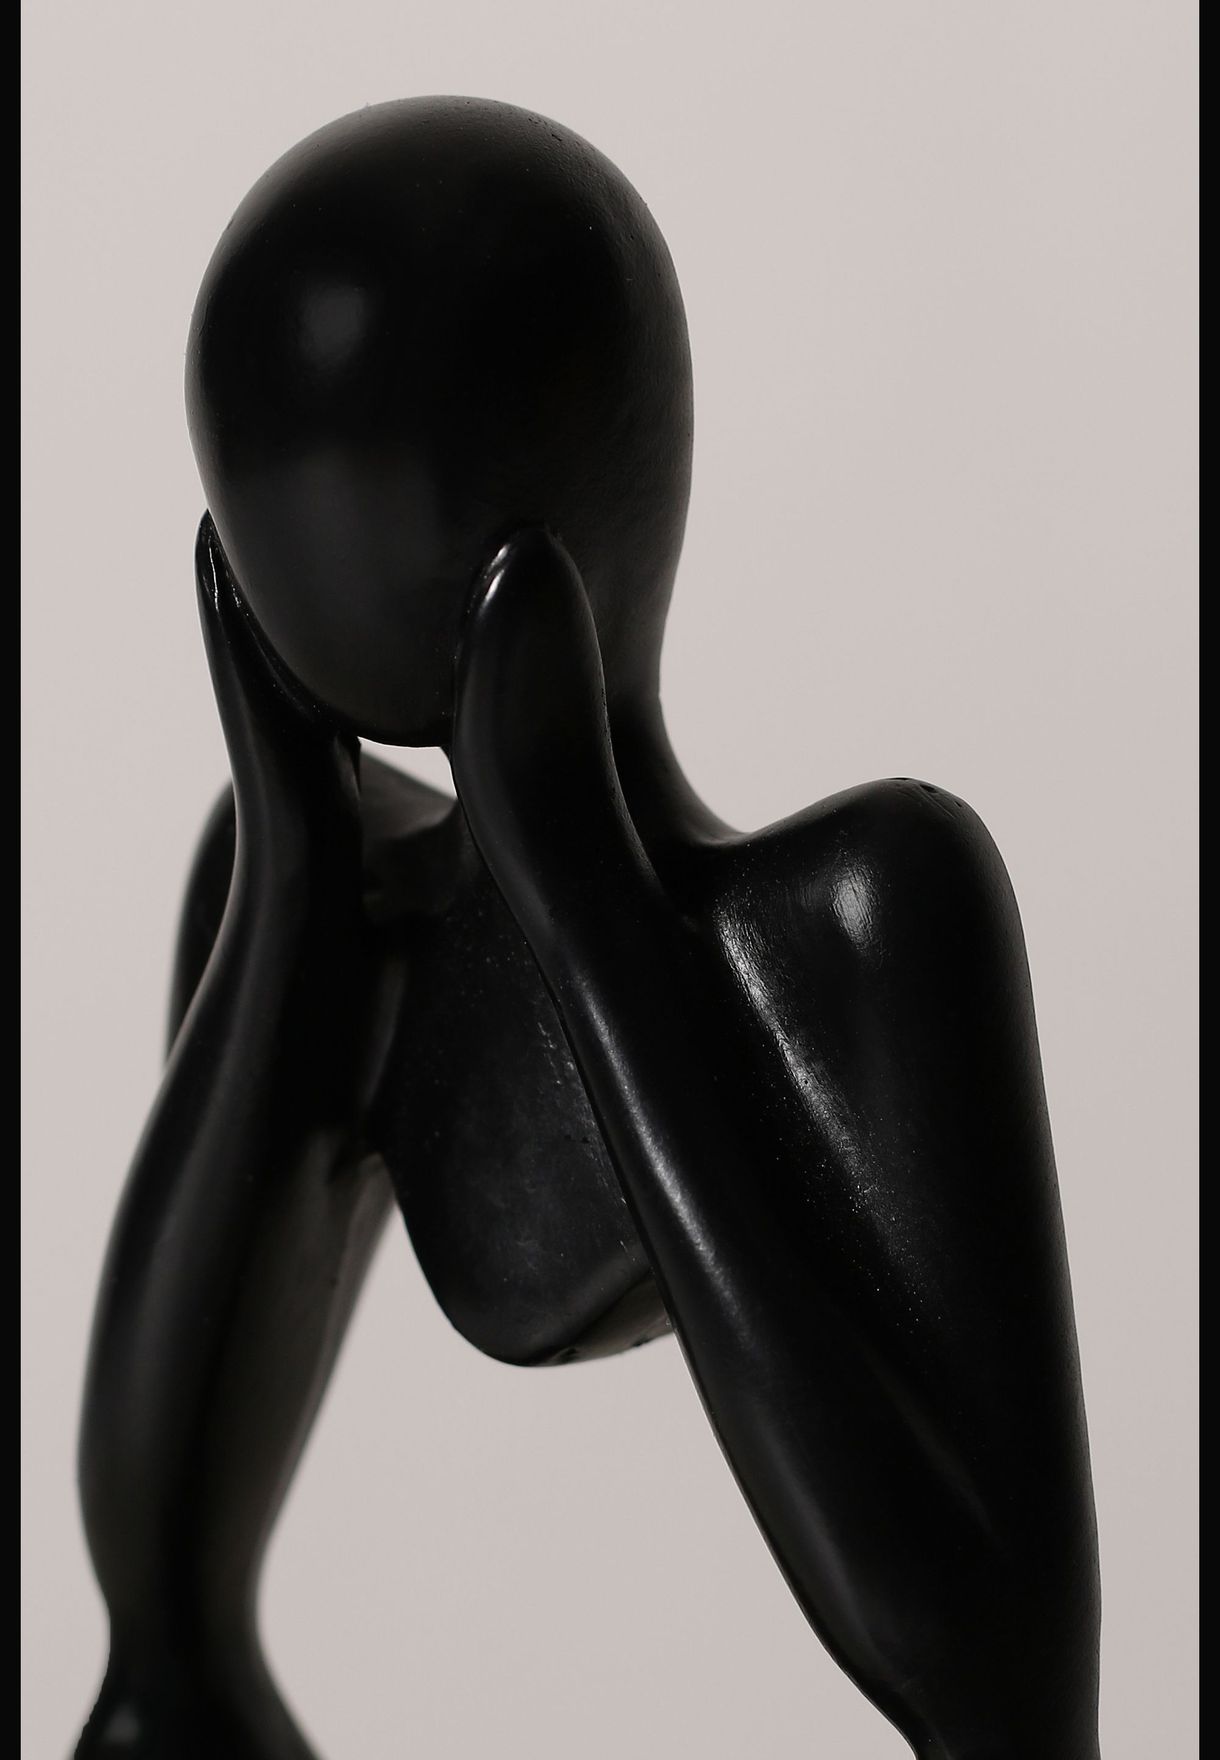 Modern Figurine Shaped Solid Minimalistic Ceramic Figure Showpiece For Home Decor 